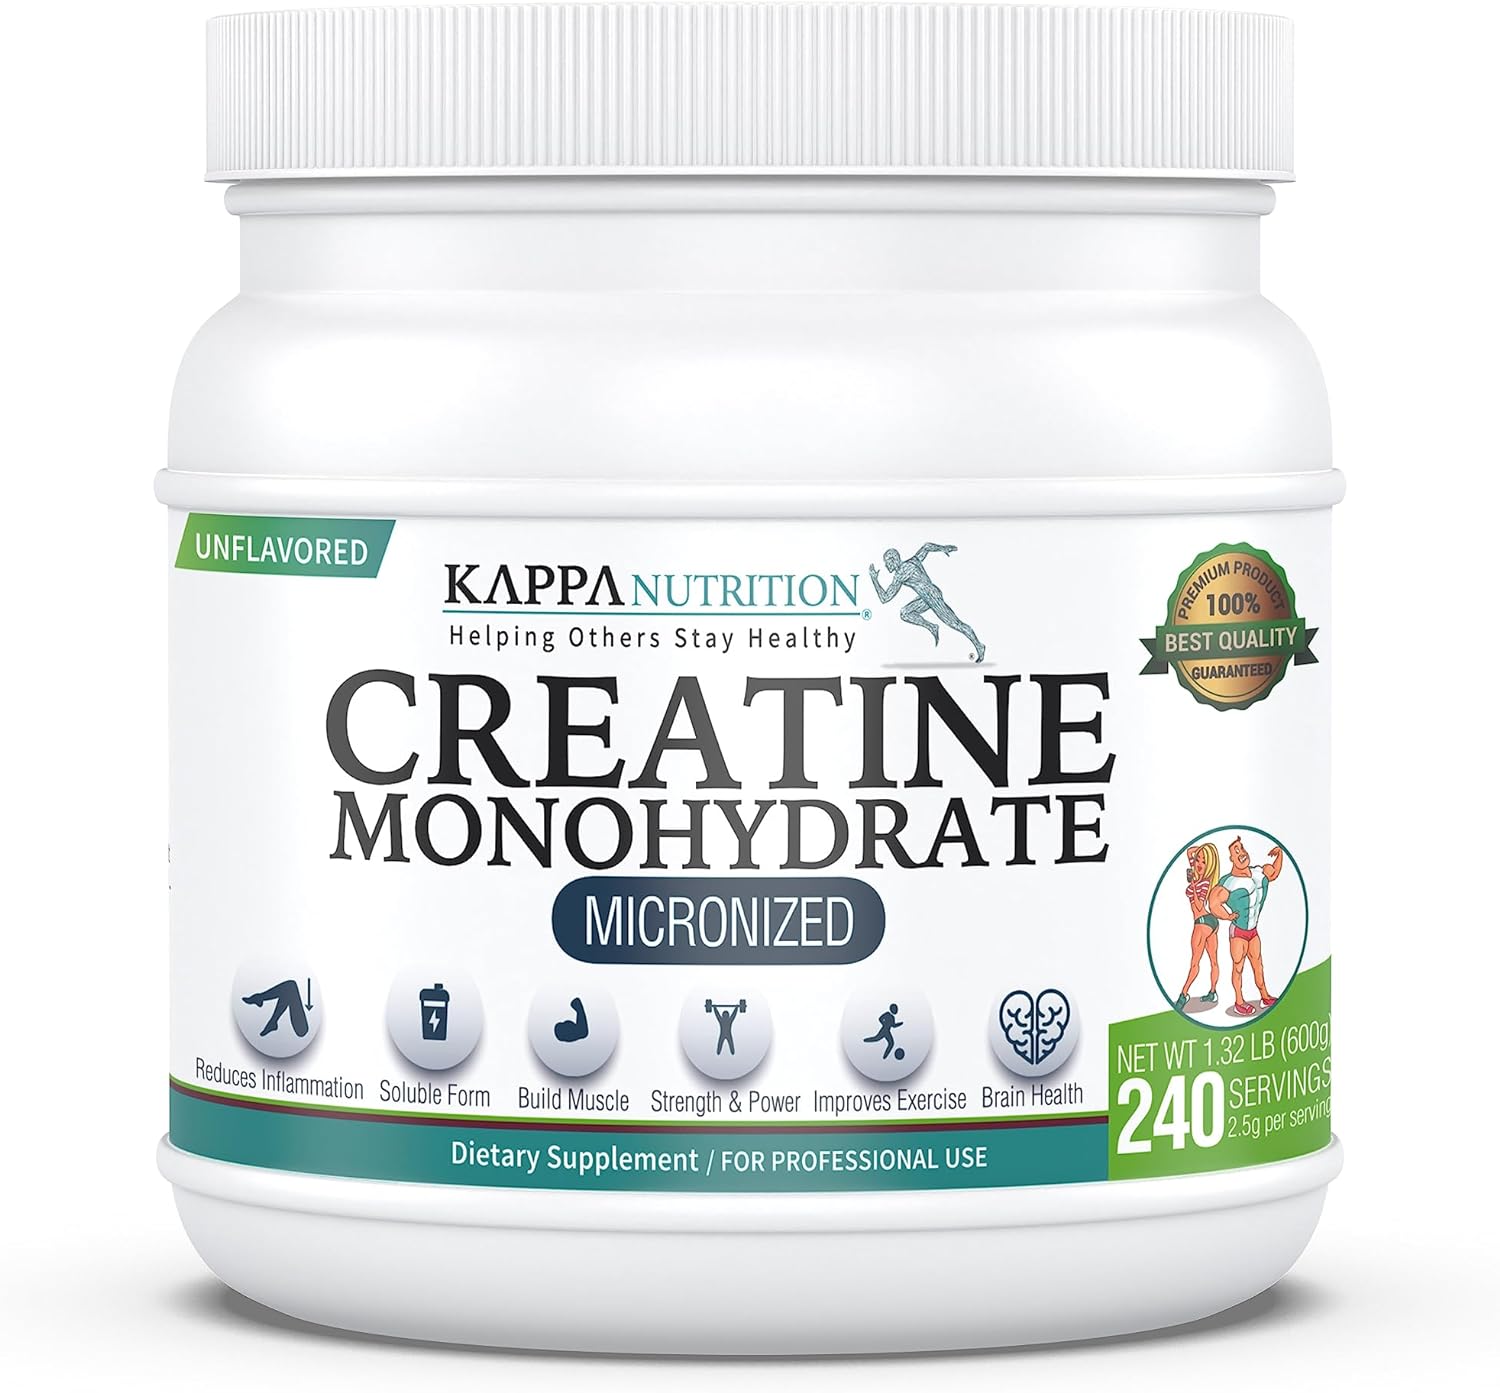 KAPPA NUTRITION Creatine Monohydrate Micronized 2.5g (240 Servings)